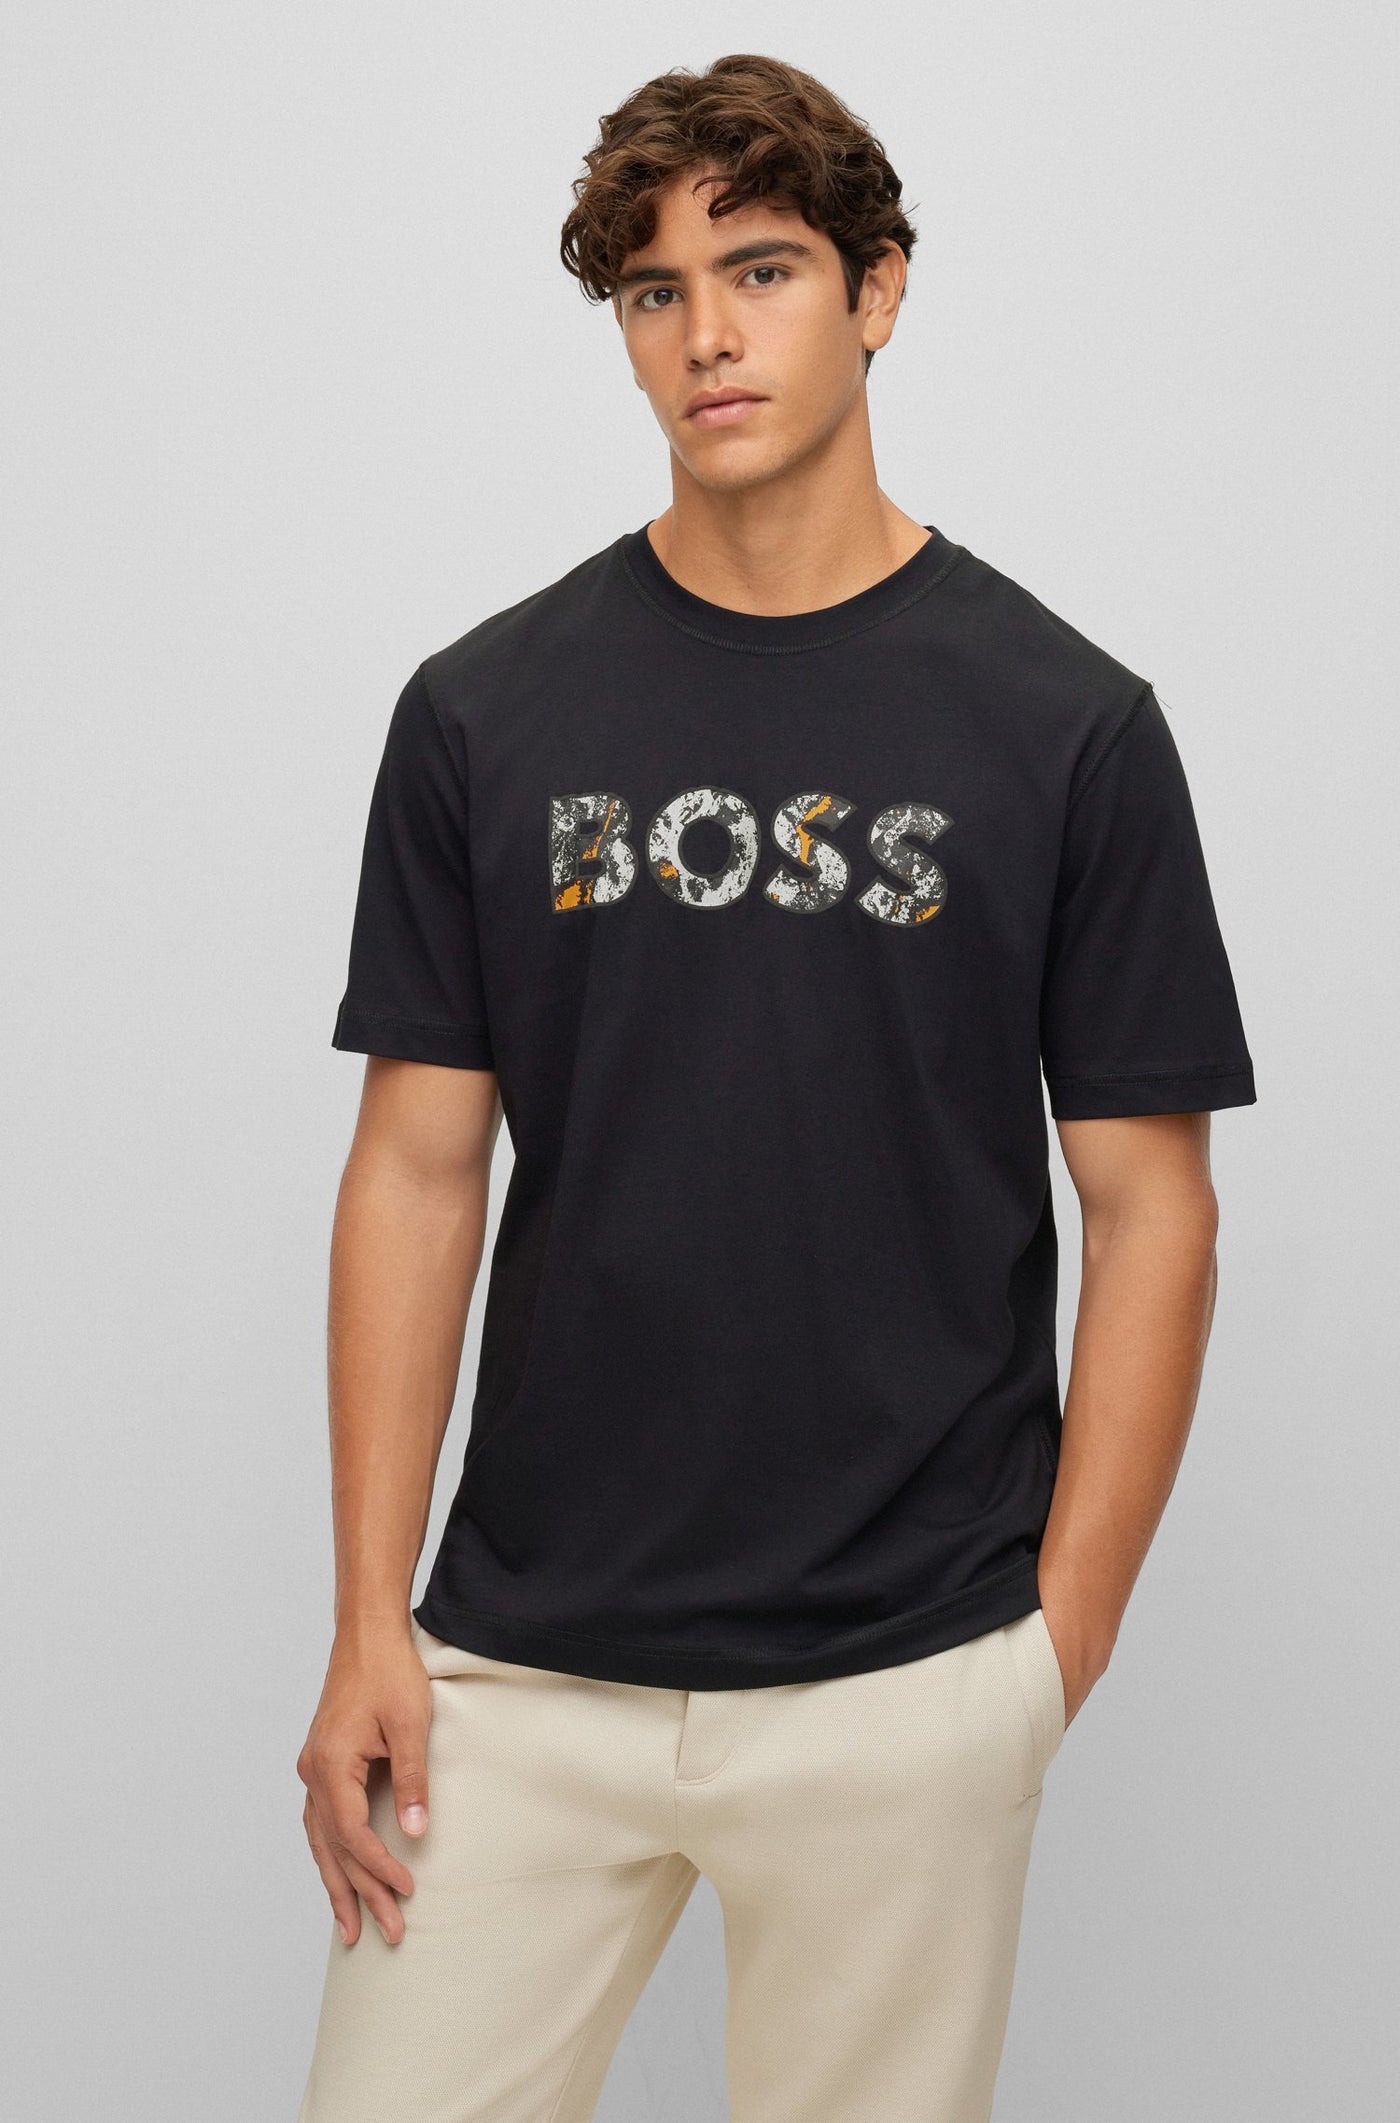 BOSS Teetrury 2 T Shirt in Black